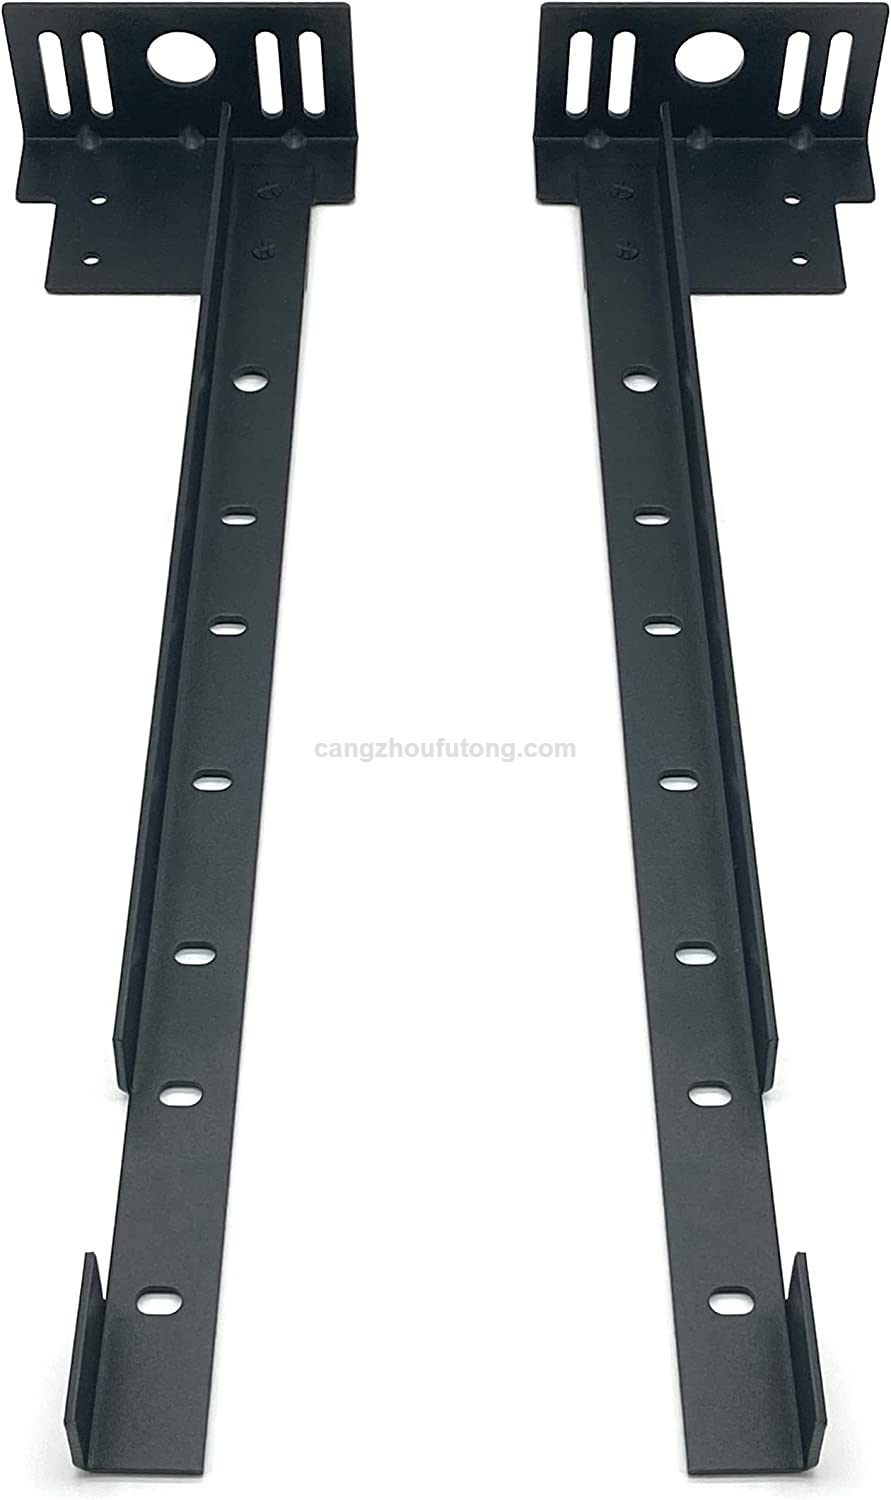 Metal Bed Frame Footboard Extension Brackets